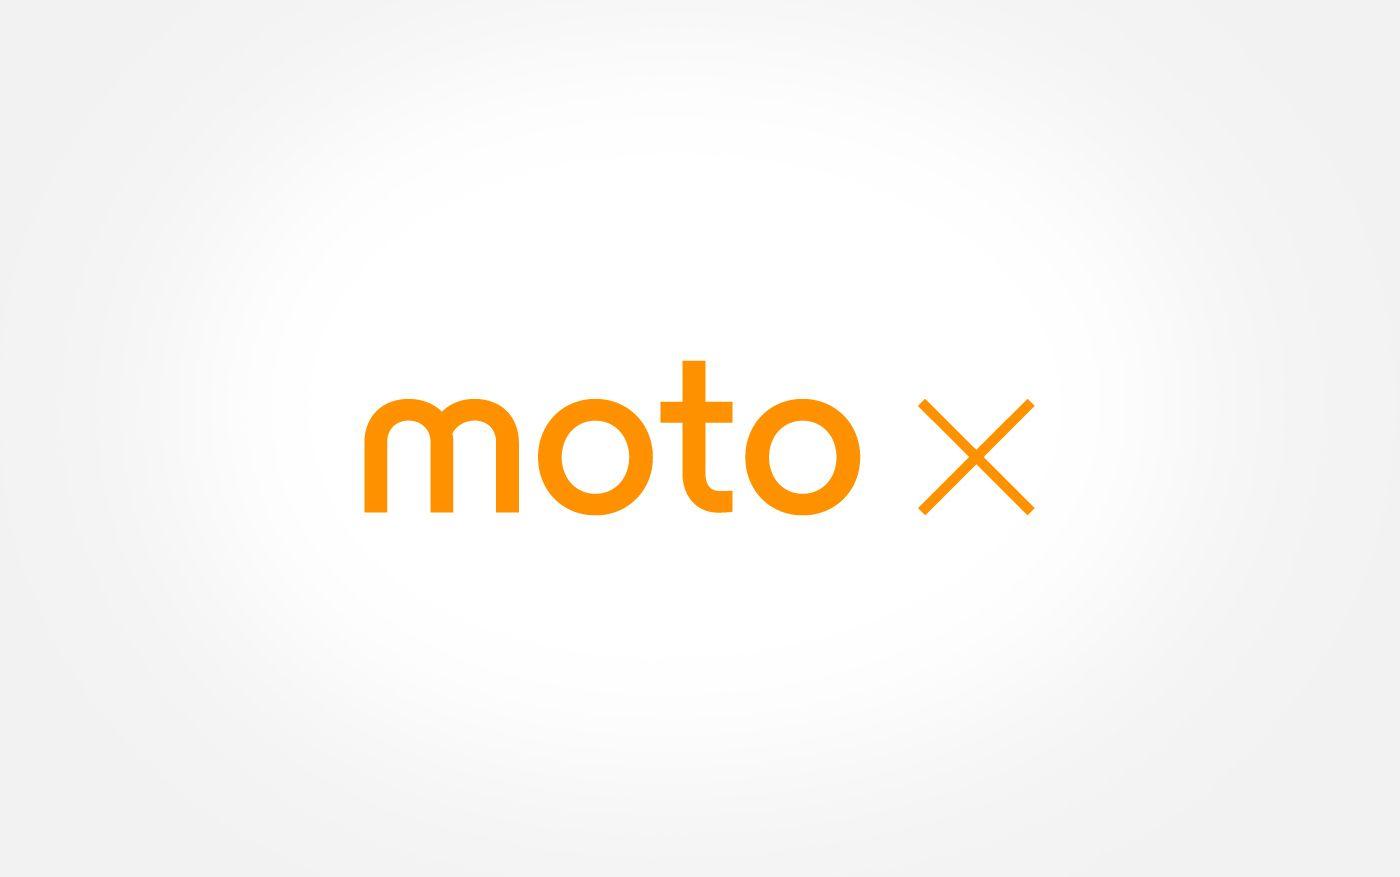 First Motorola Logo - First Image of the 4th Gen Motorola Moto X leaks